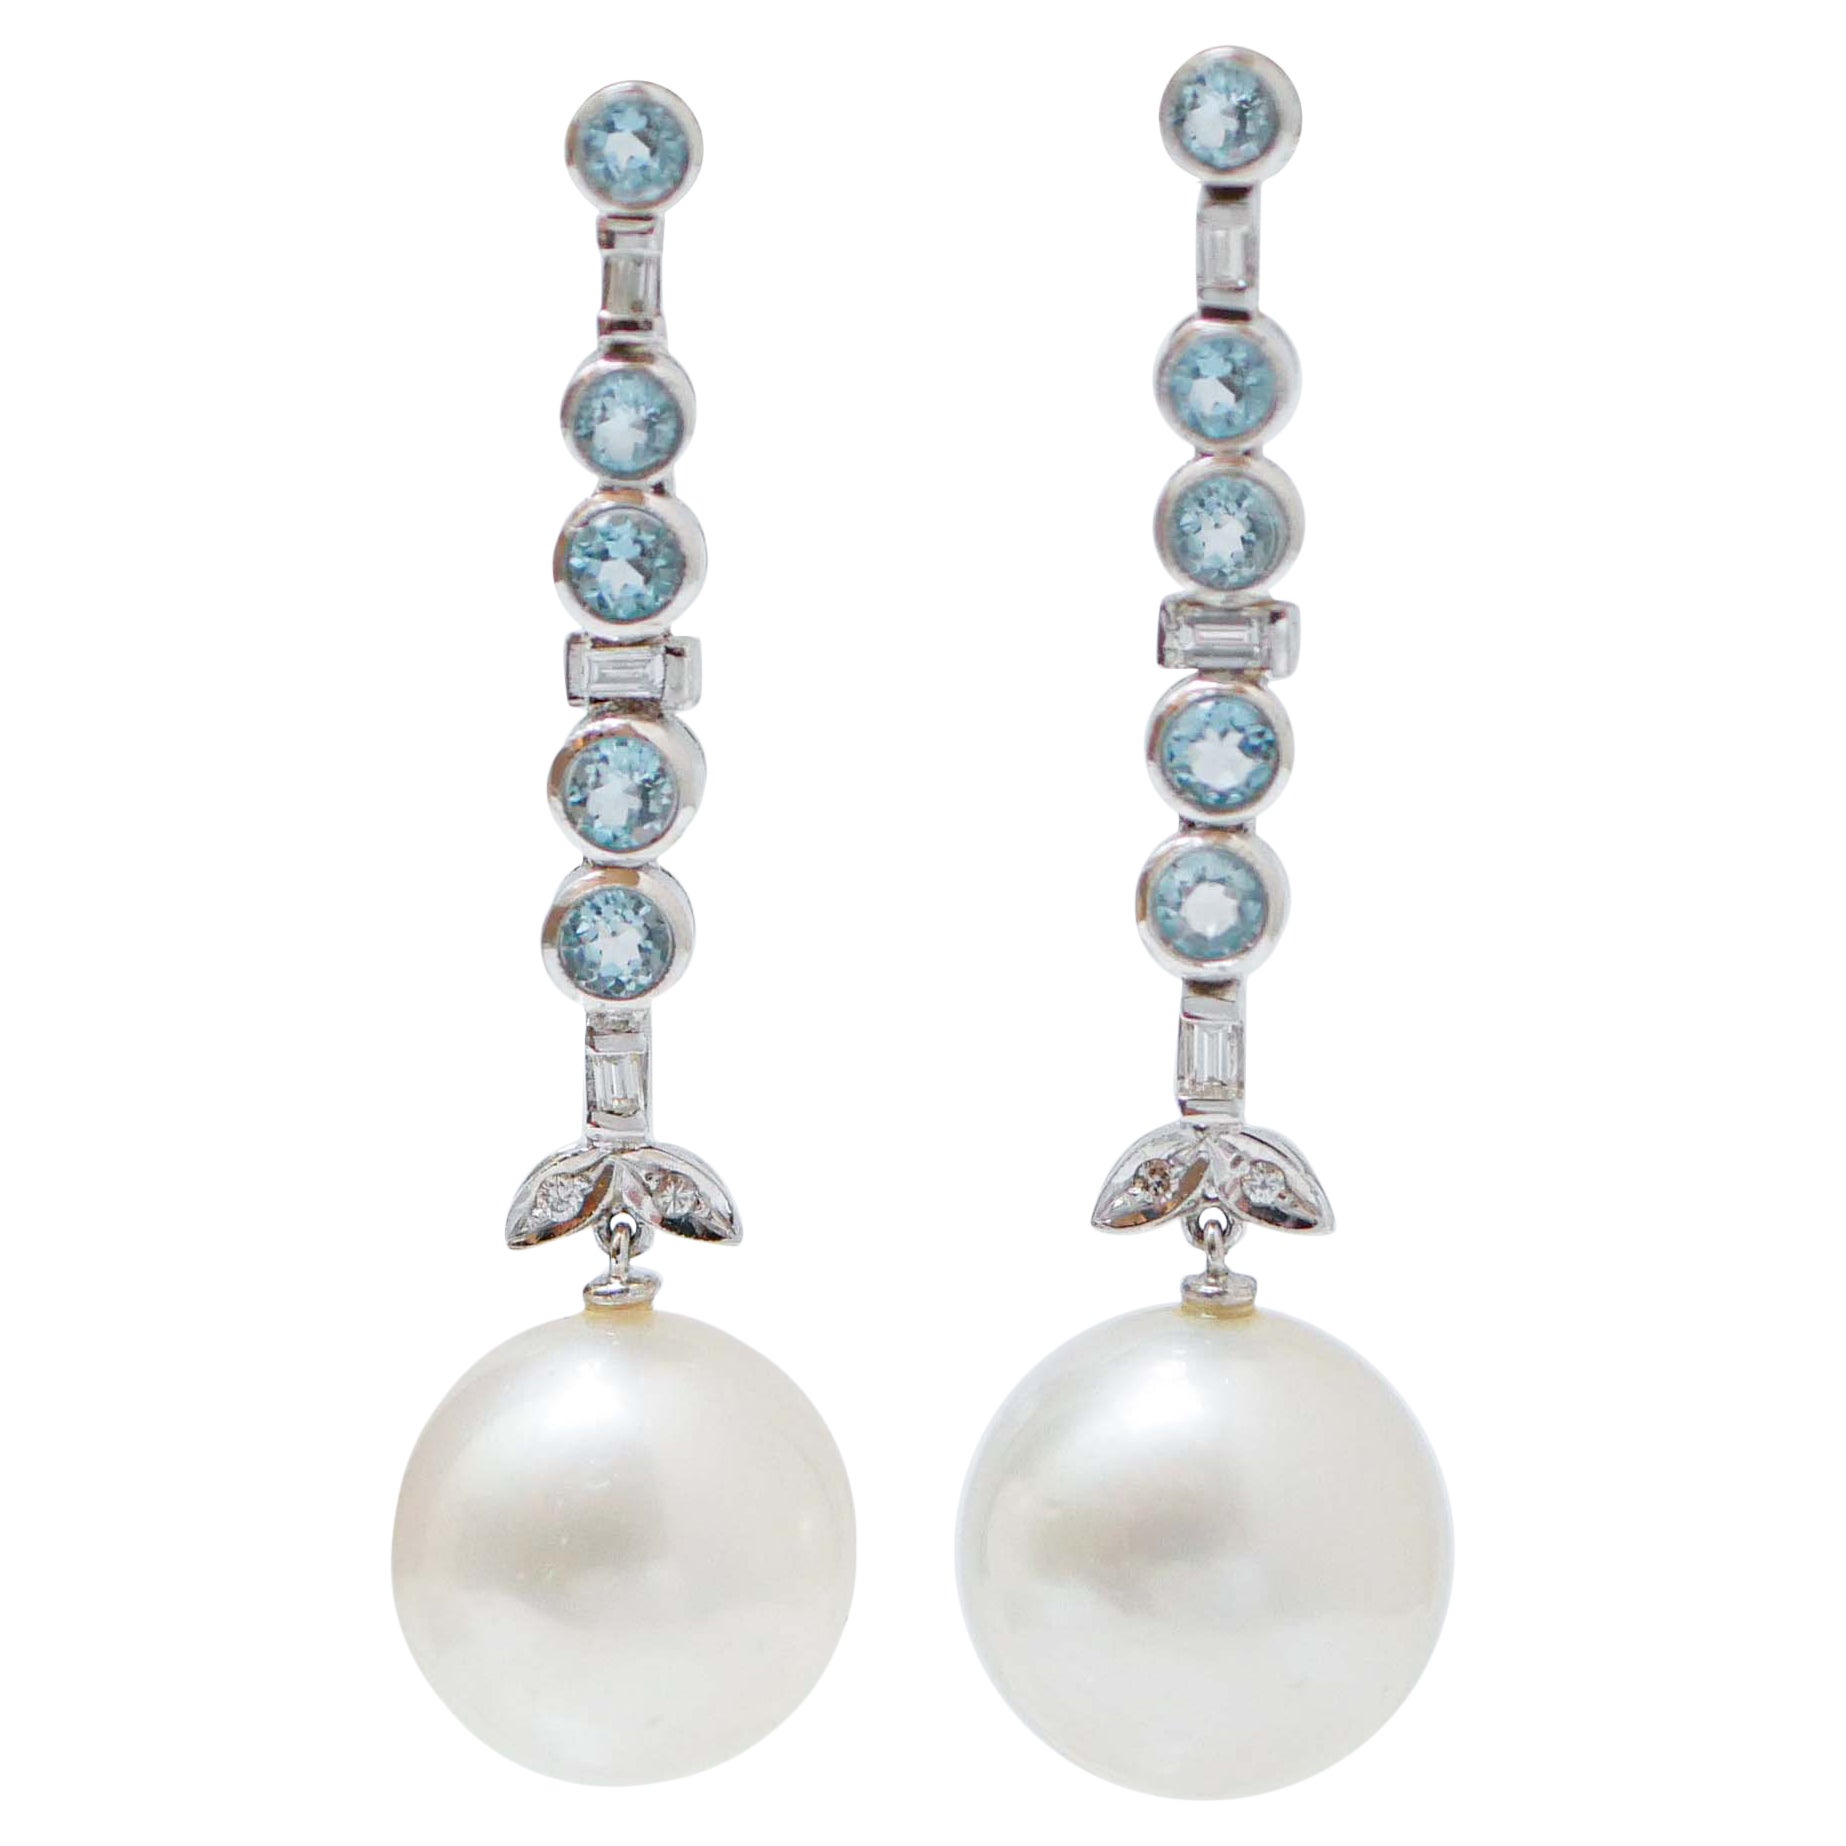 South-Sea Pearls, Aquamarine, Diamonds, Platinum Earrings.